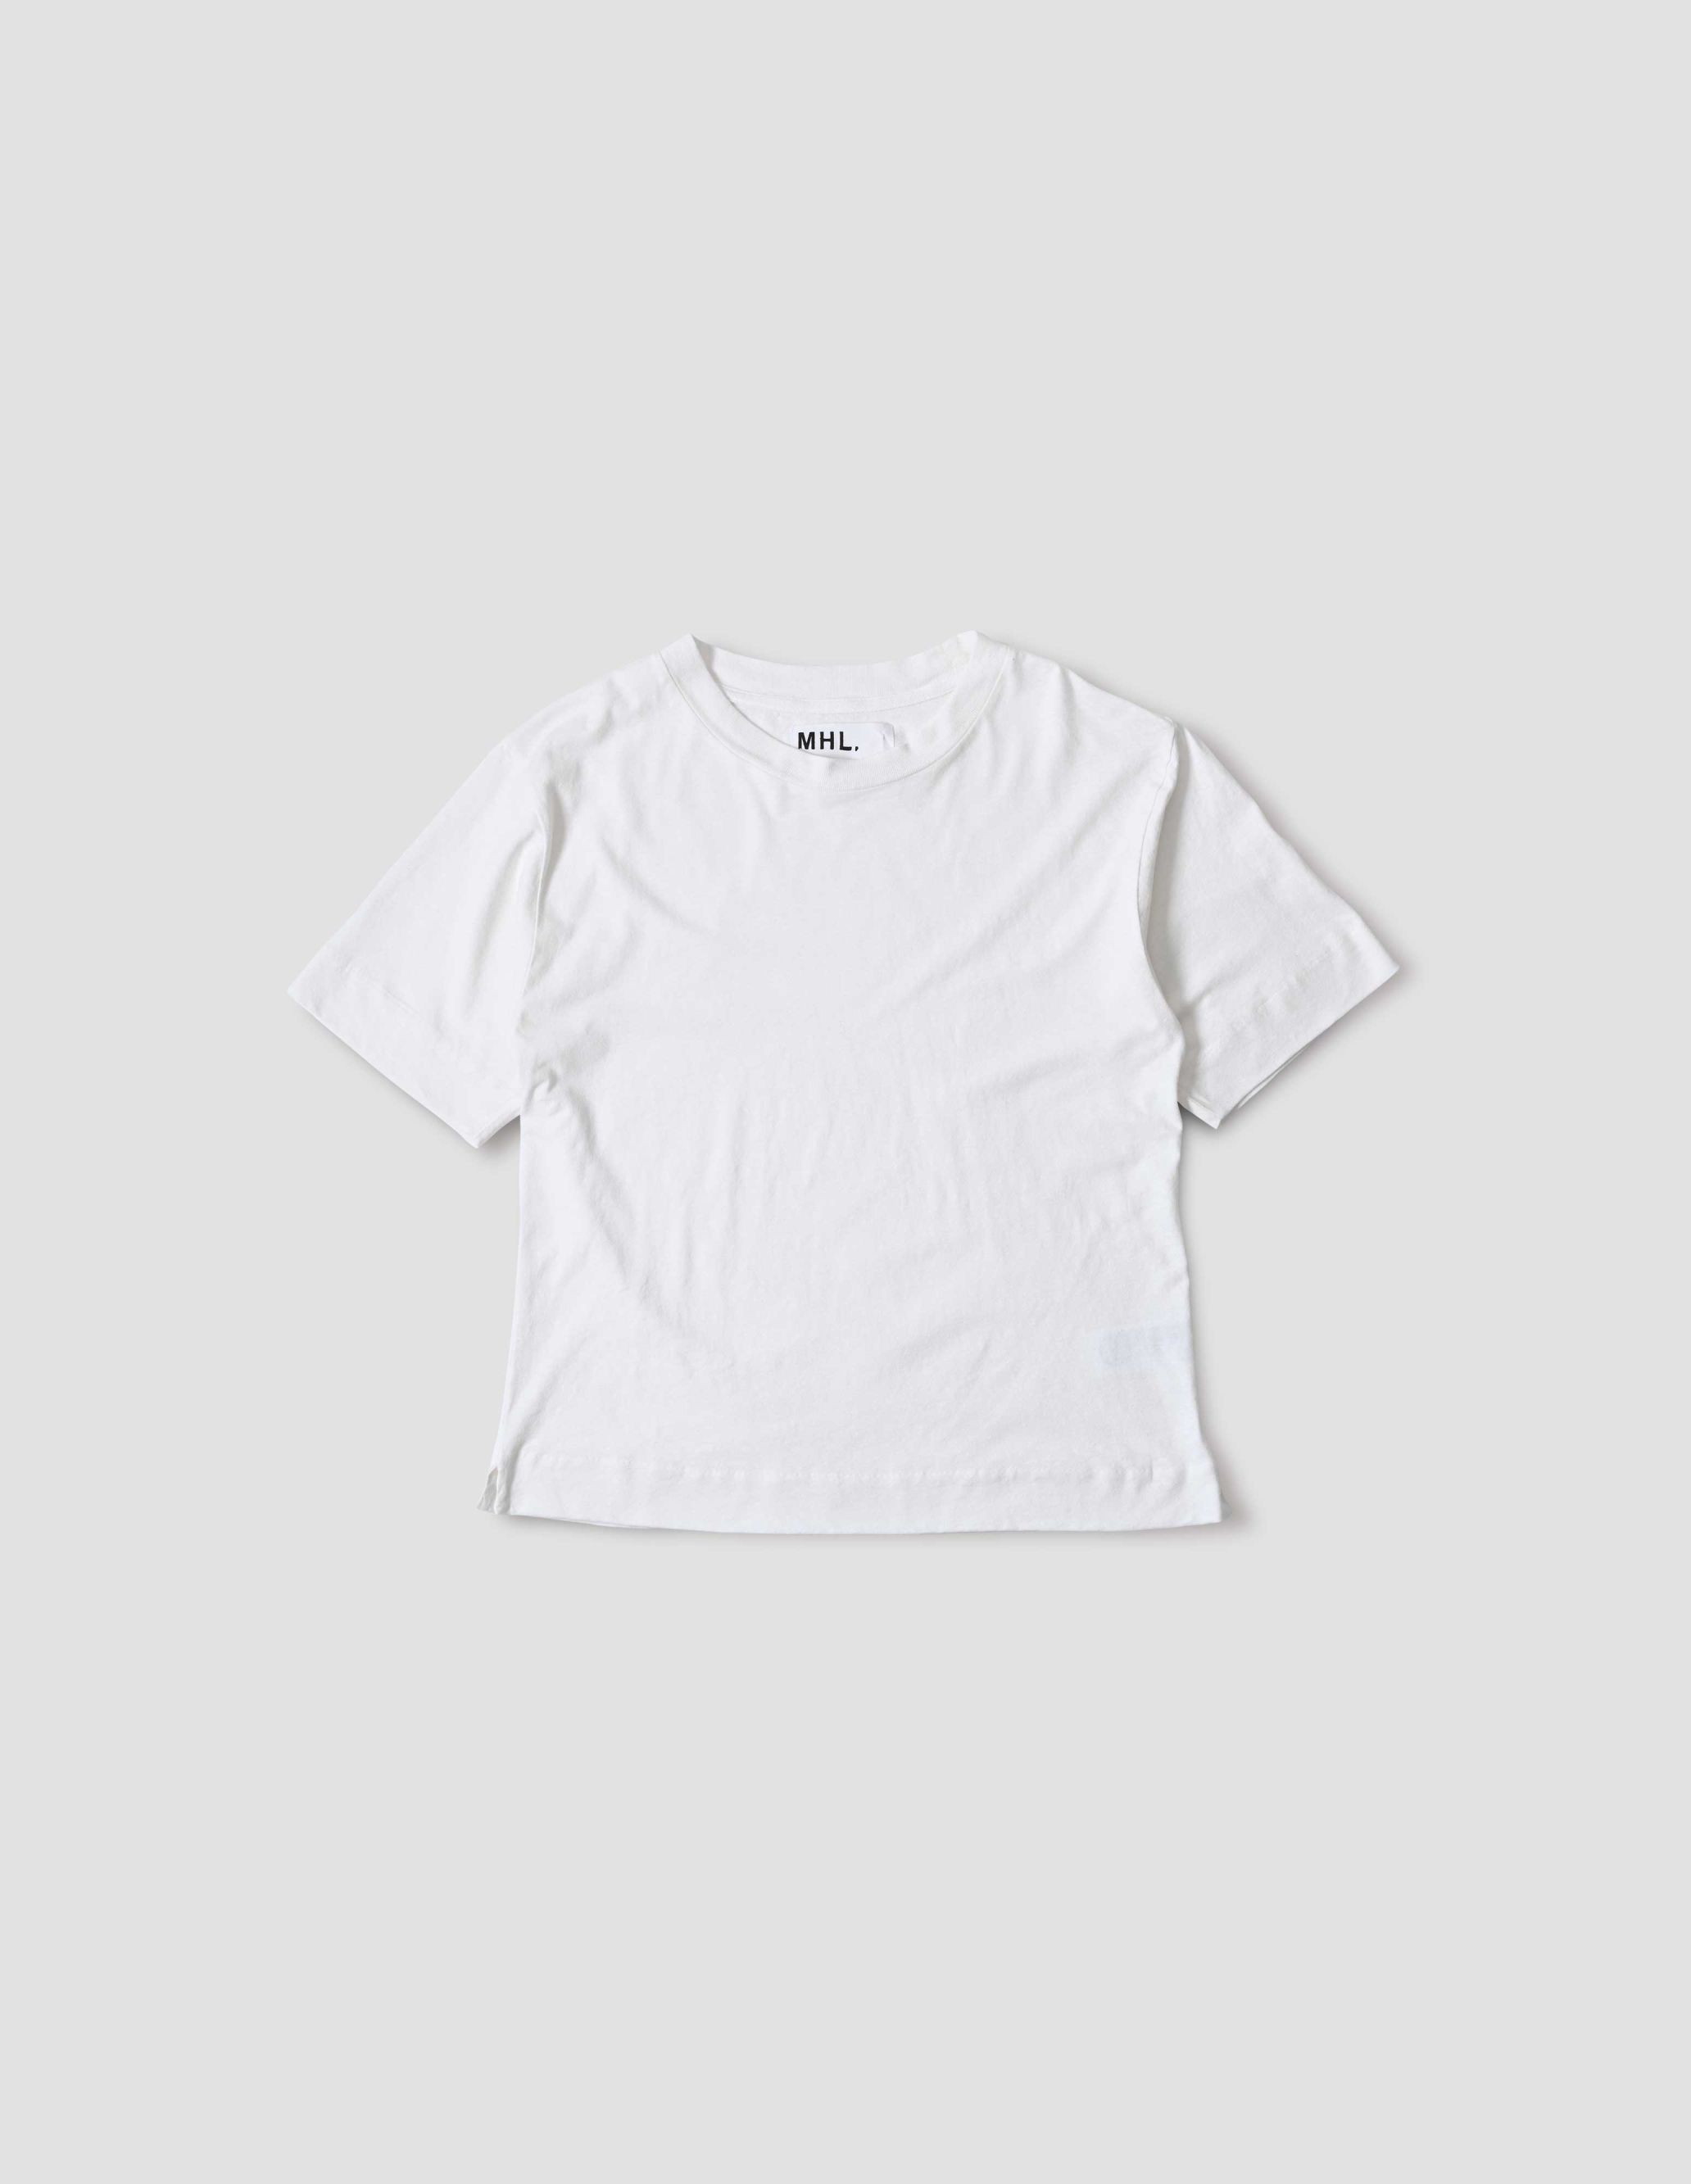 MARGARET HOWELL - White cotton linen simple t shirt | MHL. by Margaret ...